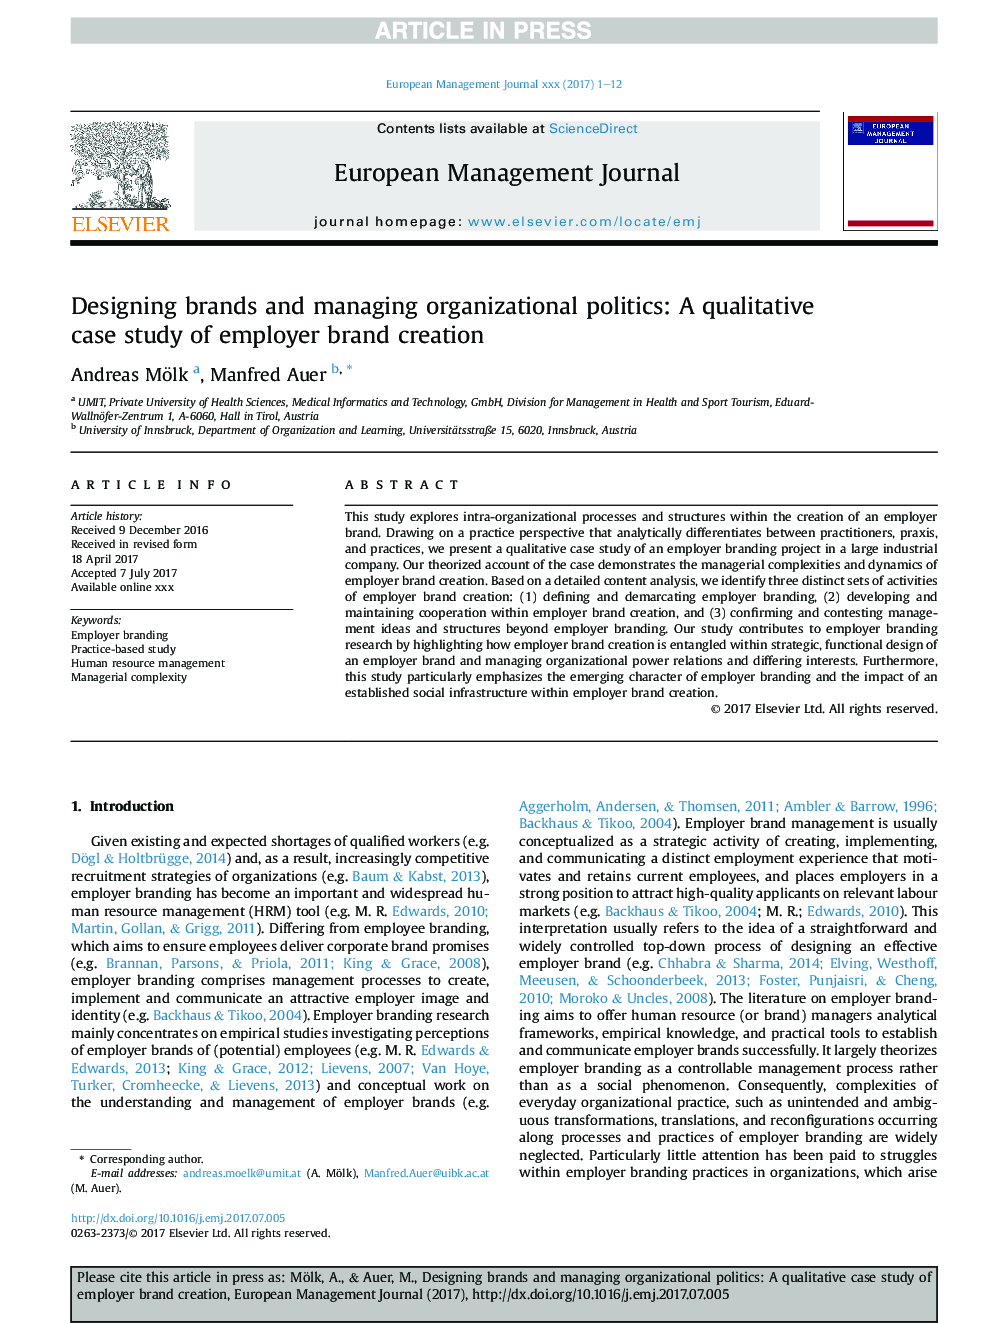 Designing brands and managing organizational politics: A qualitative case study of employer brand creation